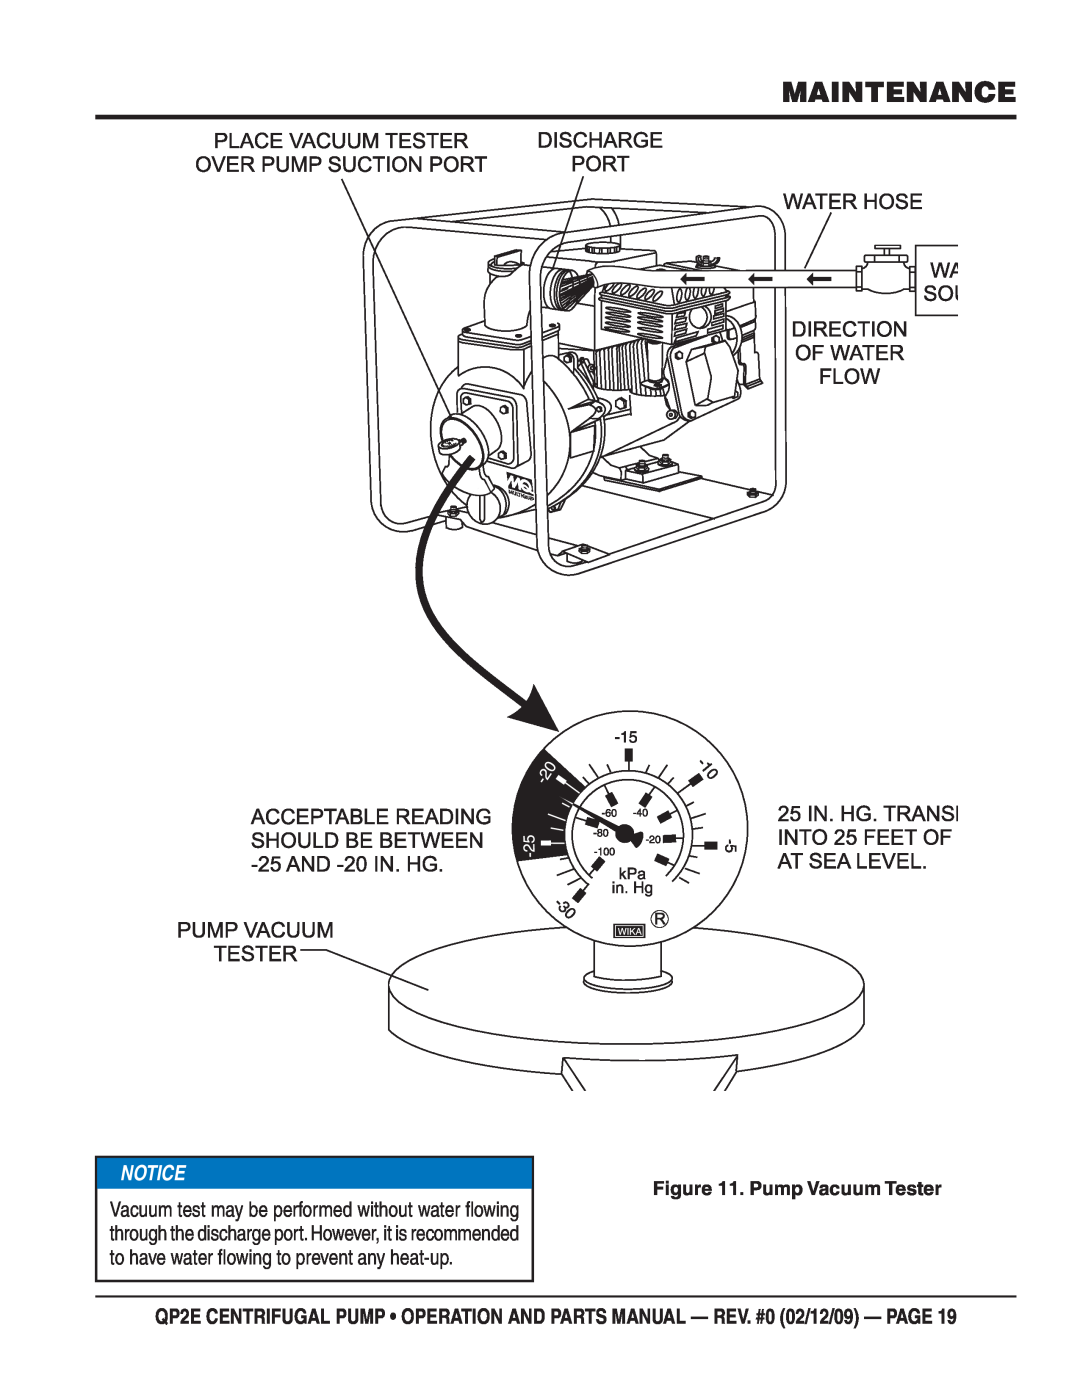 Multiquip QP2E manual Maintenance, Notice, Pump Vacuum Tester 